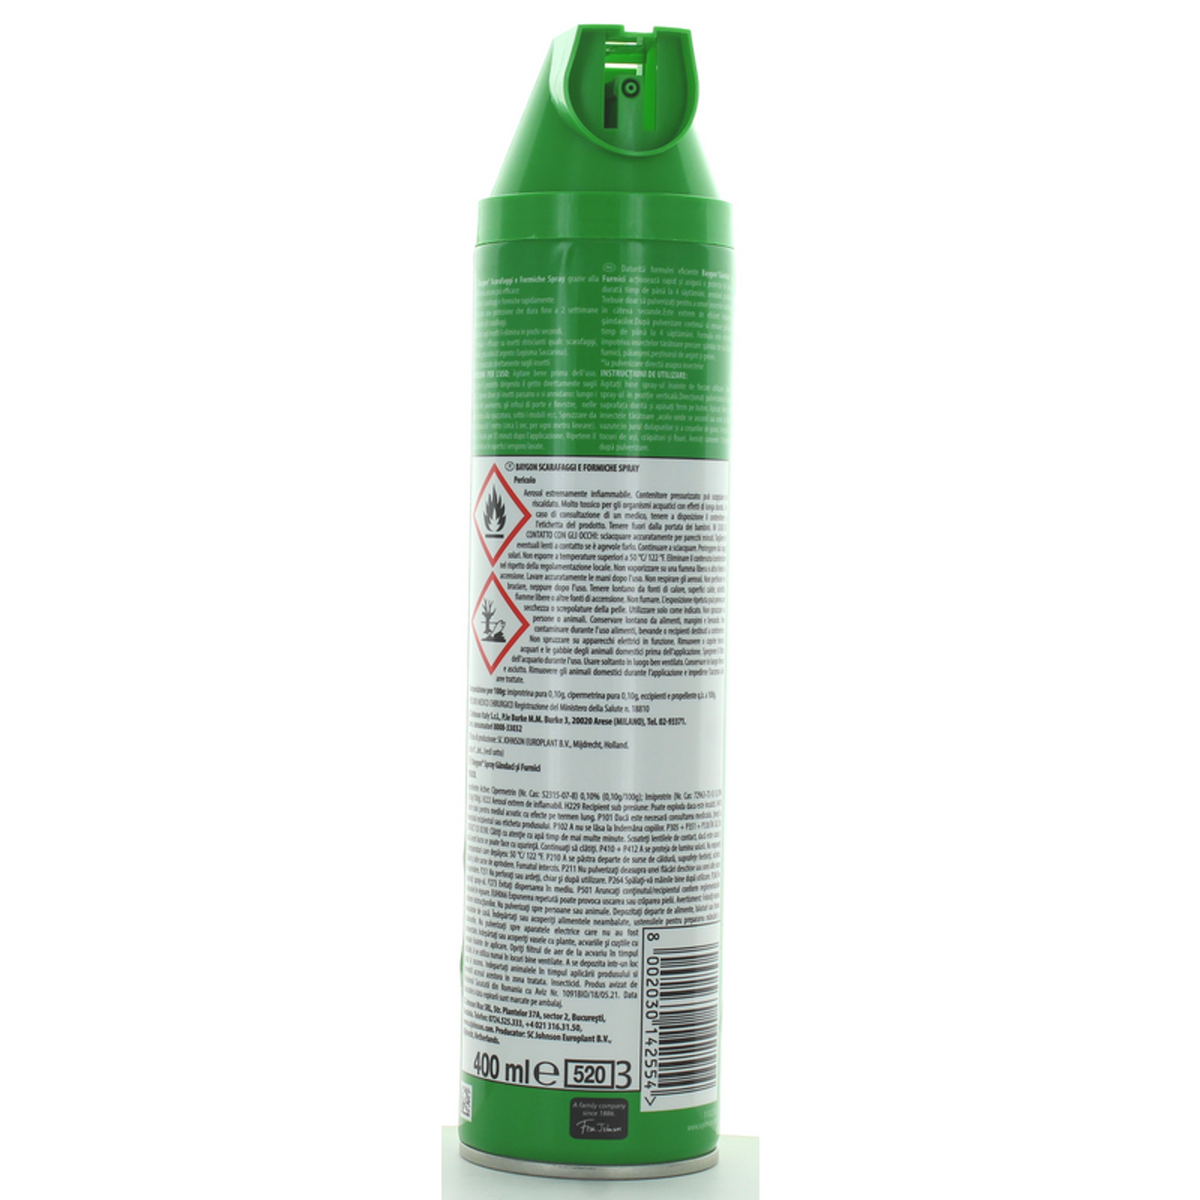 Baygon Green Insecticide Spray -kakkerlakken en mieren 400 ml